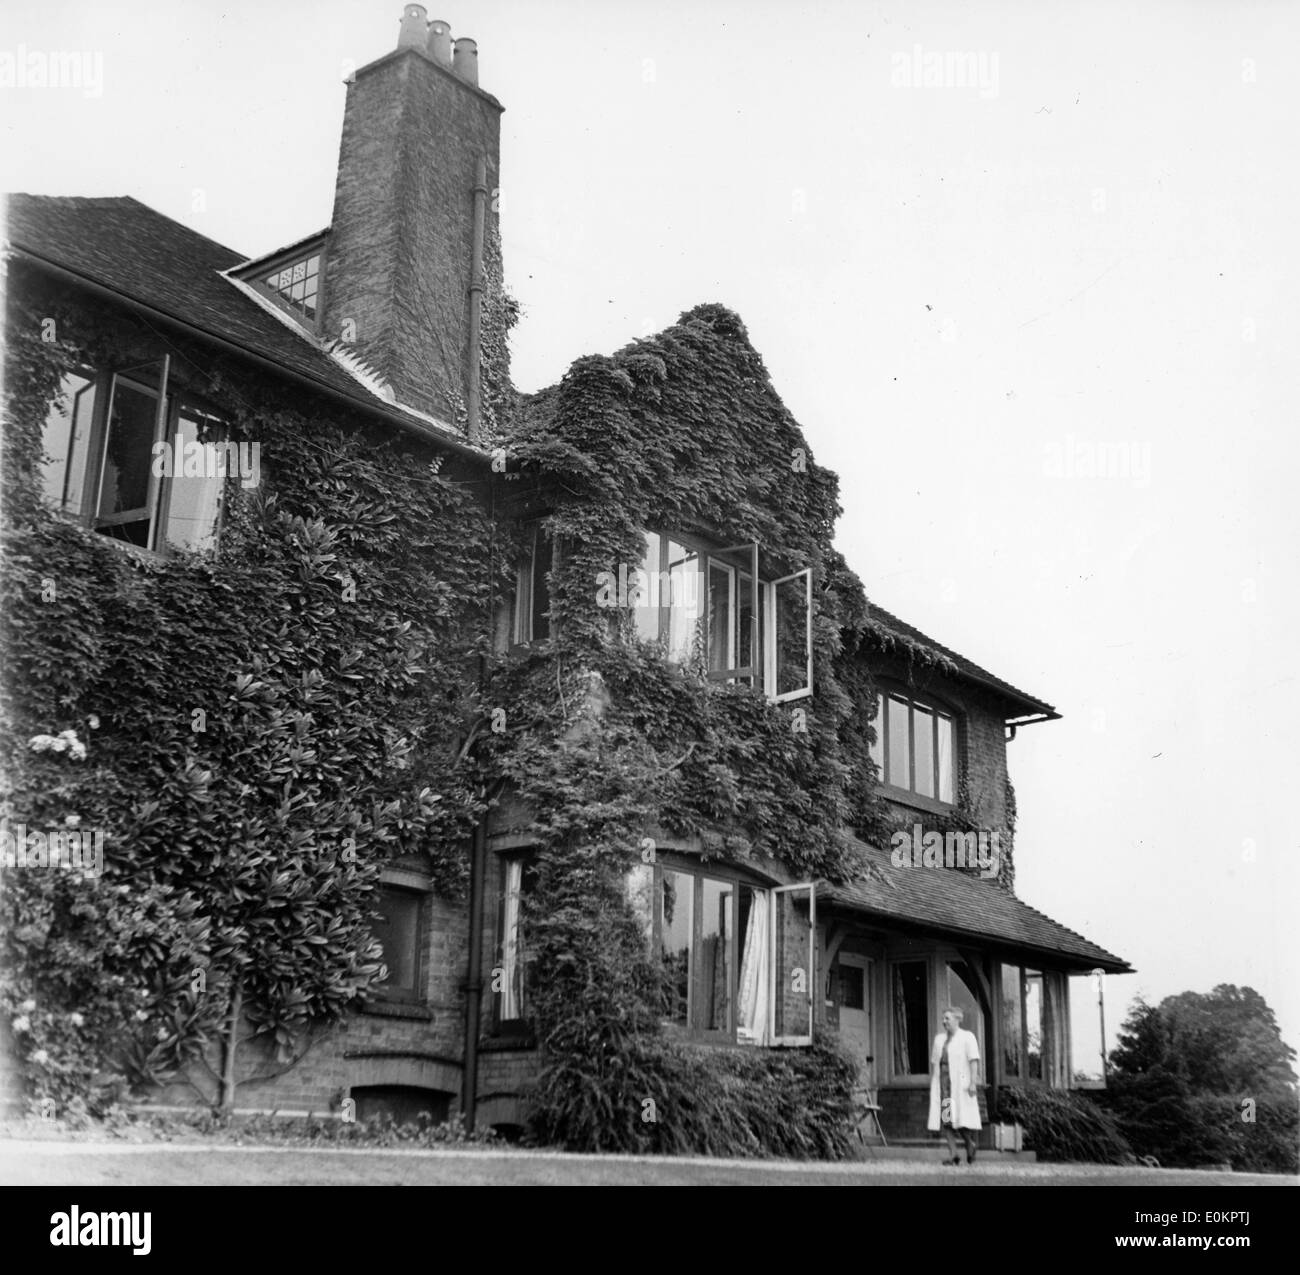 Dramaturge George Bernard Shaw's home à Londres, Angleterre Banque D'Images